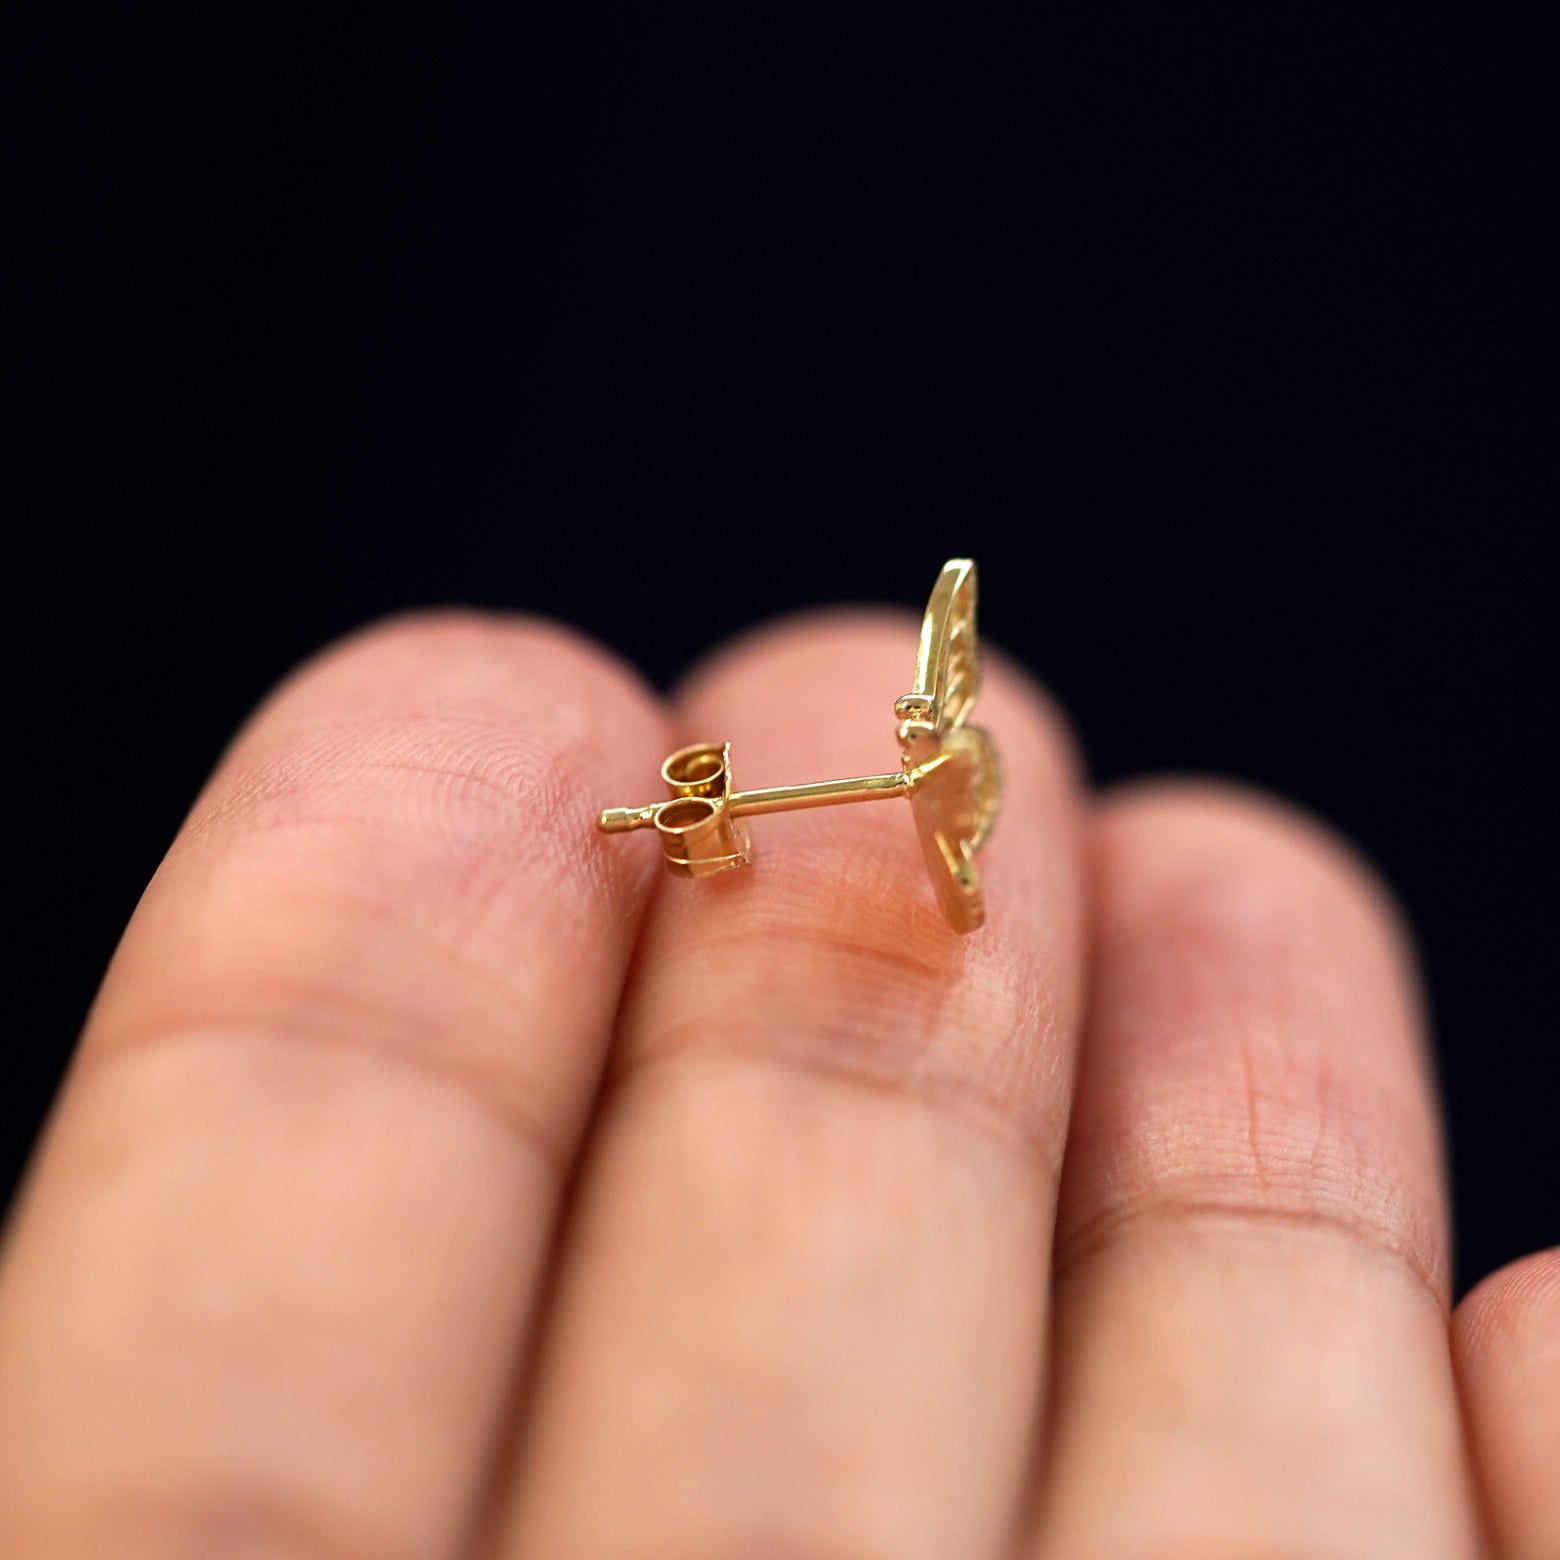 A 14k gold Butterfly Earring sitting sideways on a model's fingertips to show detail